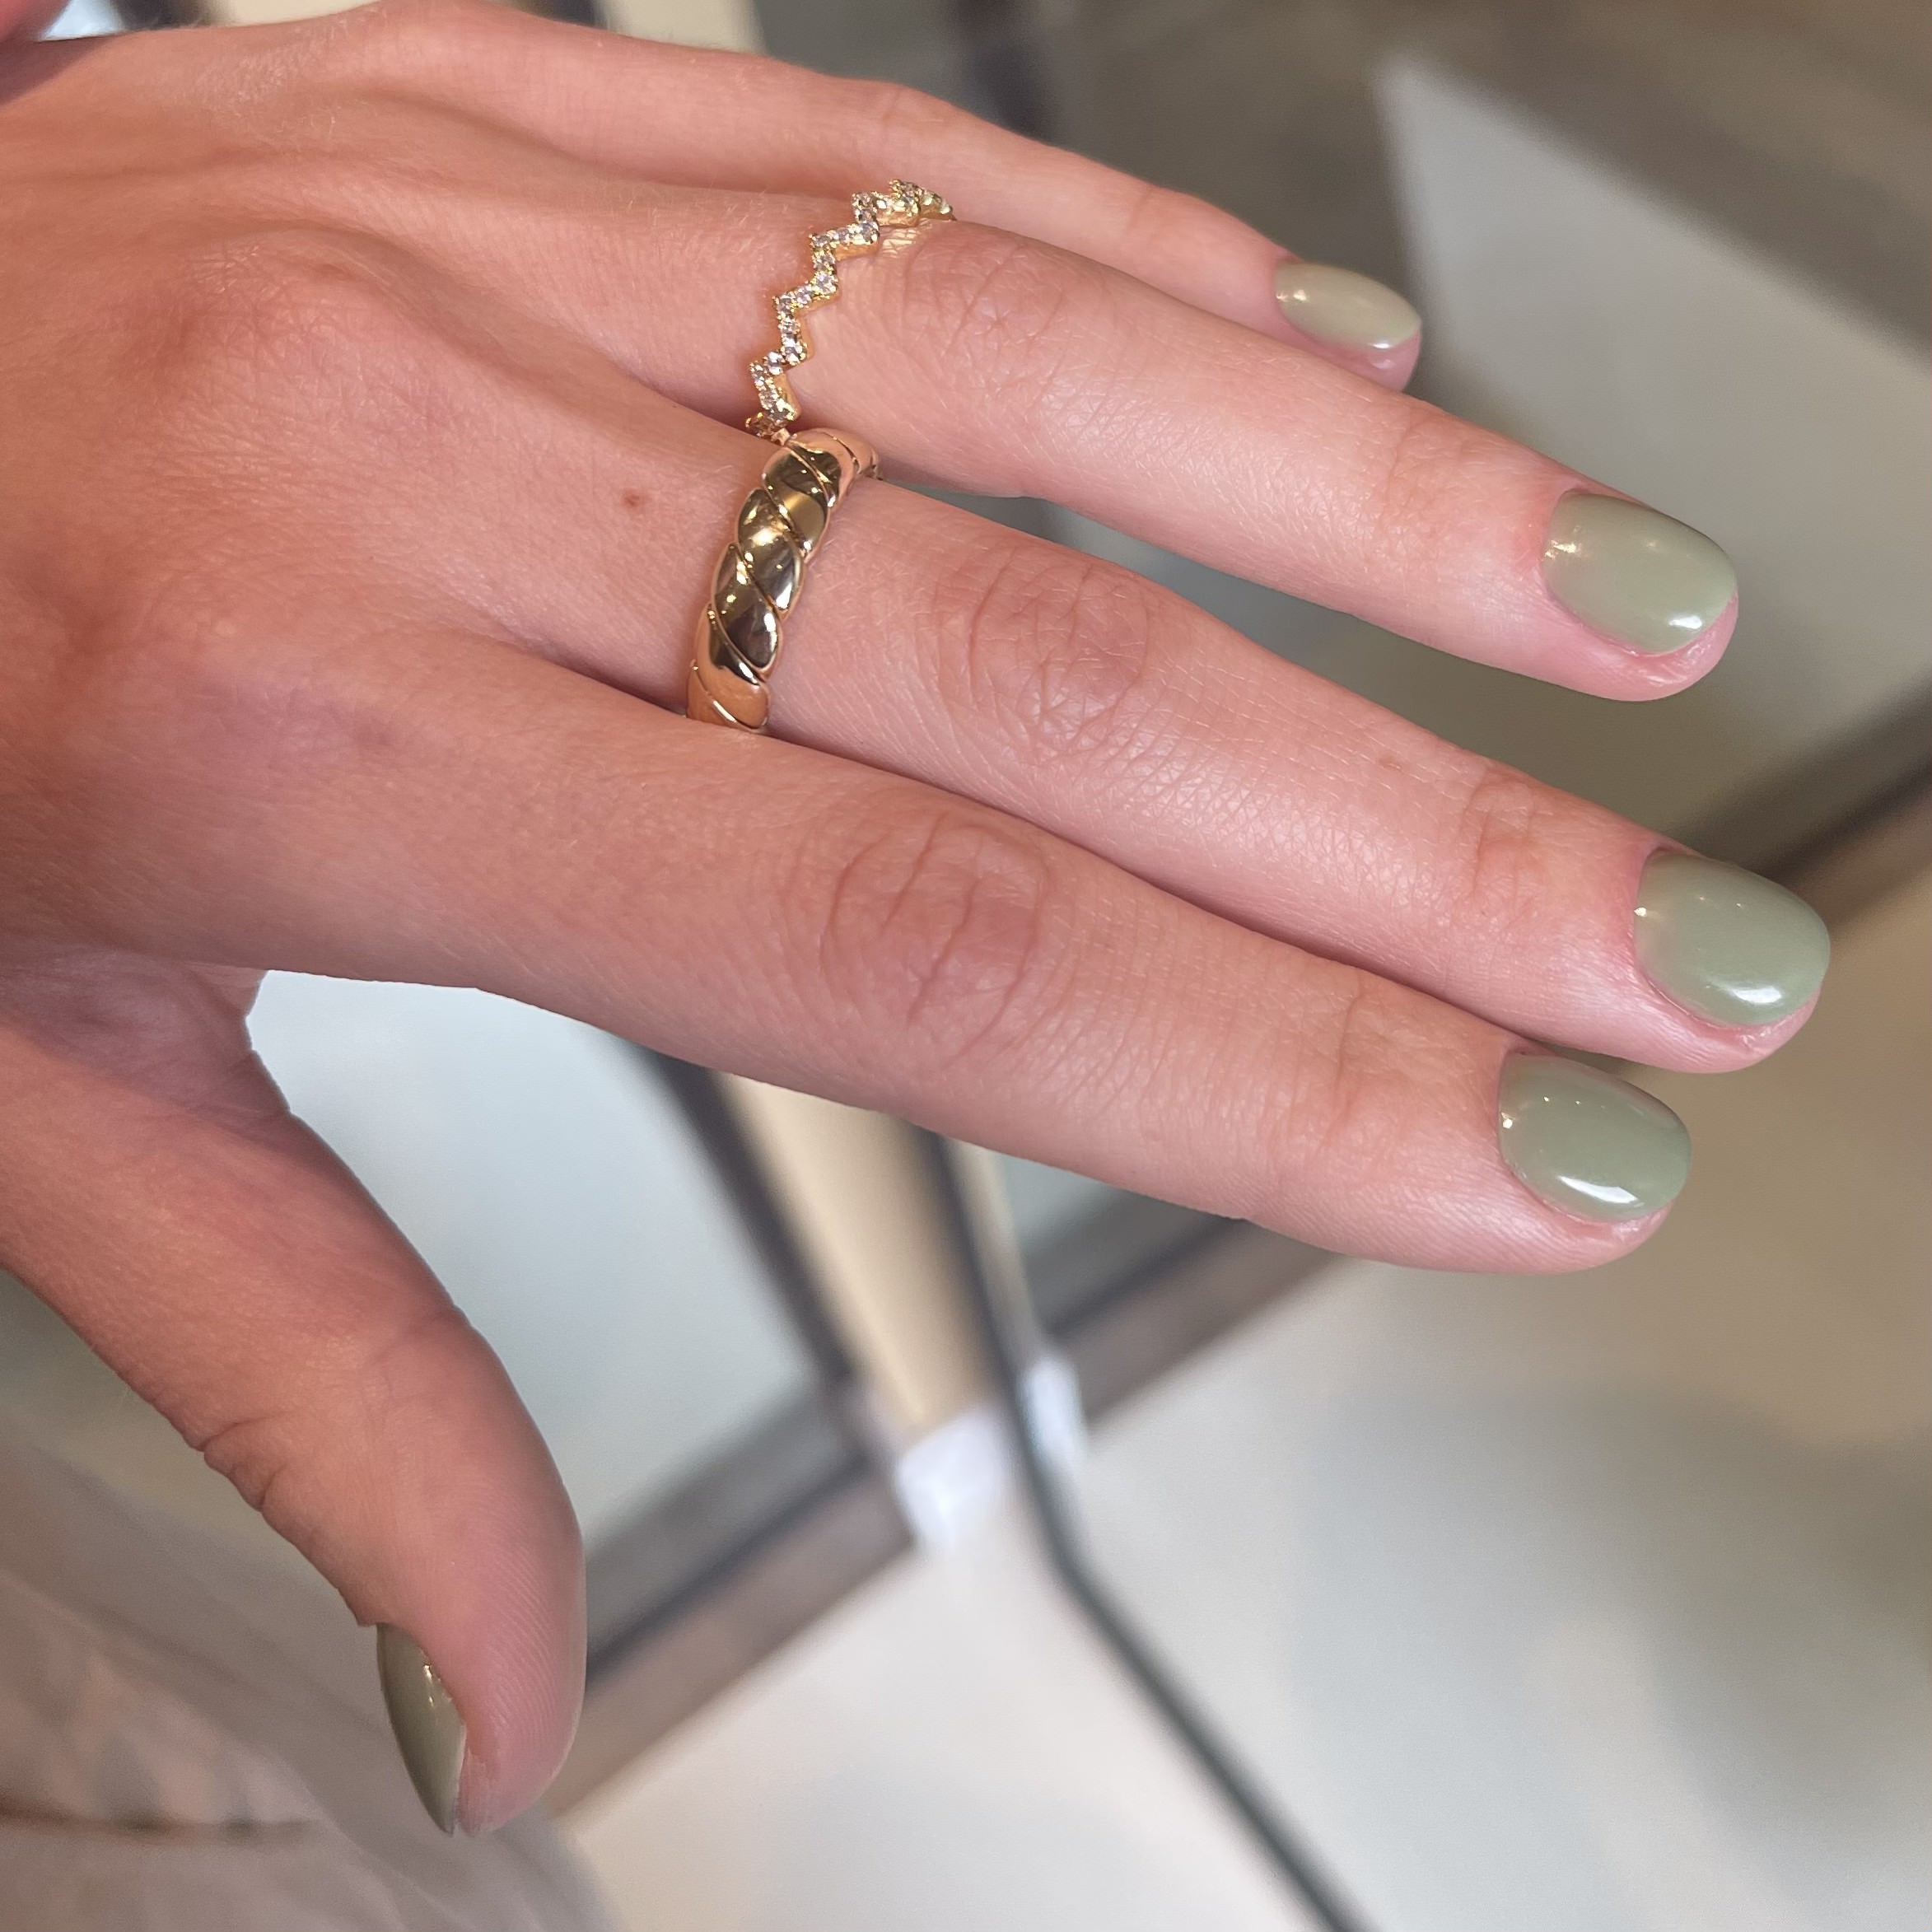 olive green manicure